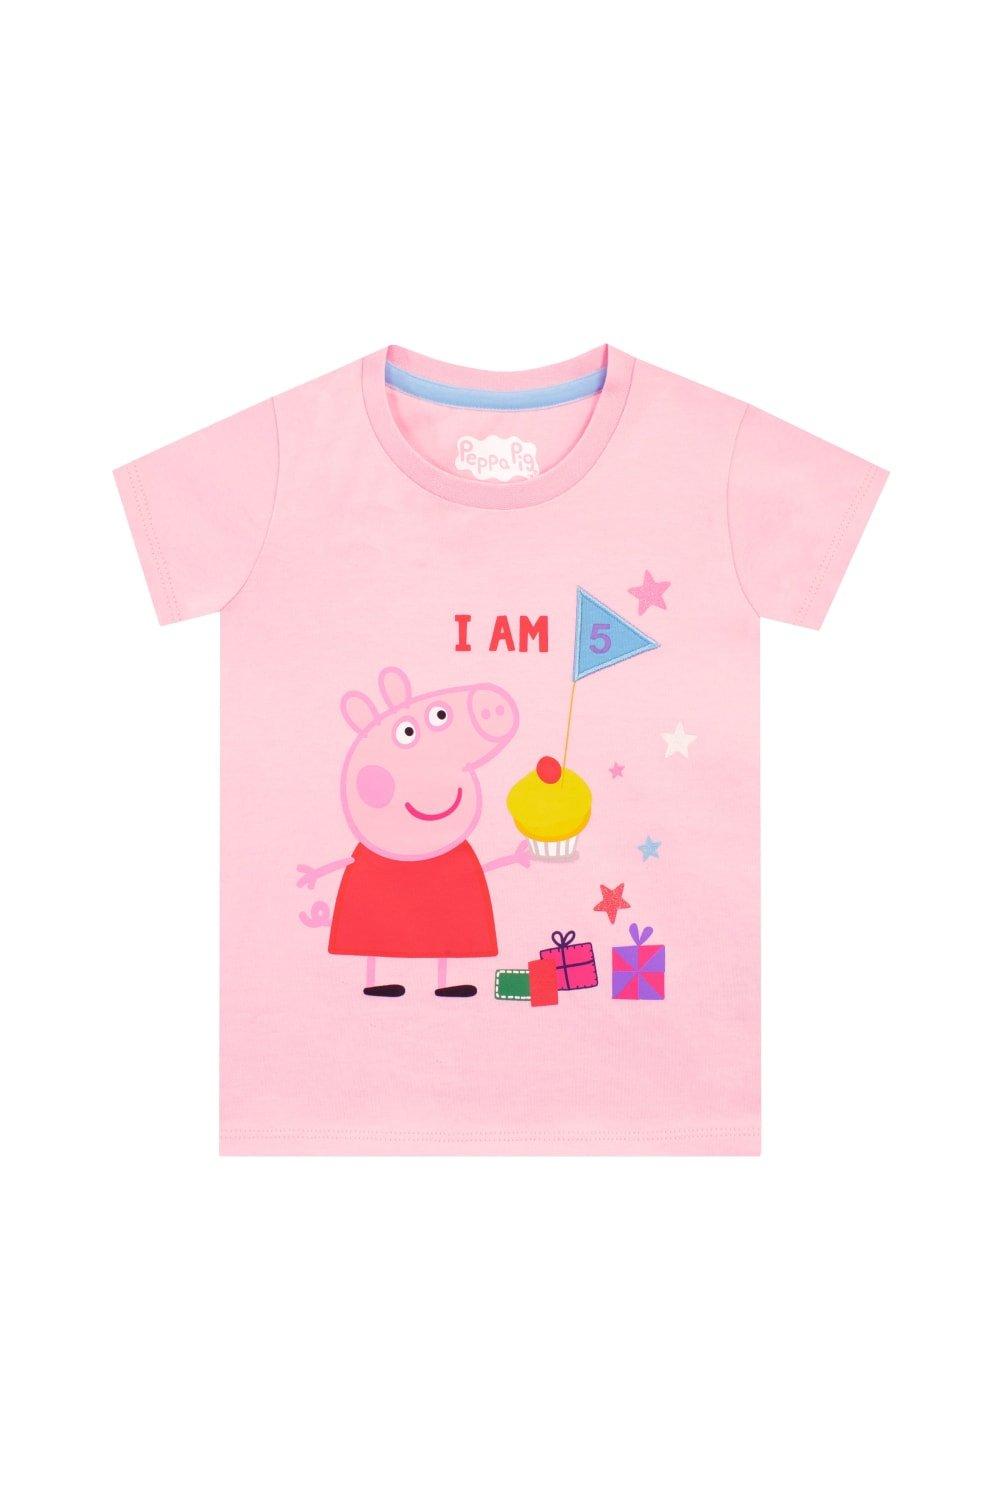 I Am 5 Birthday T-Shirt